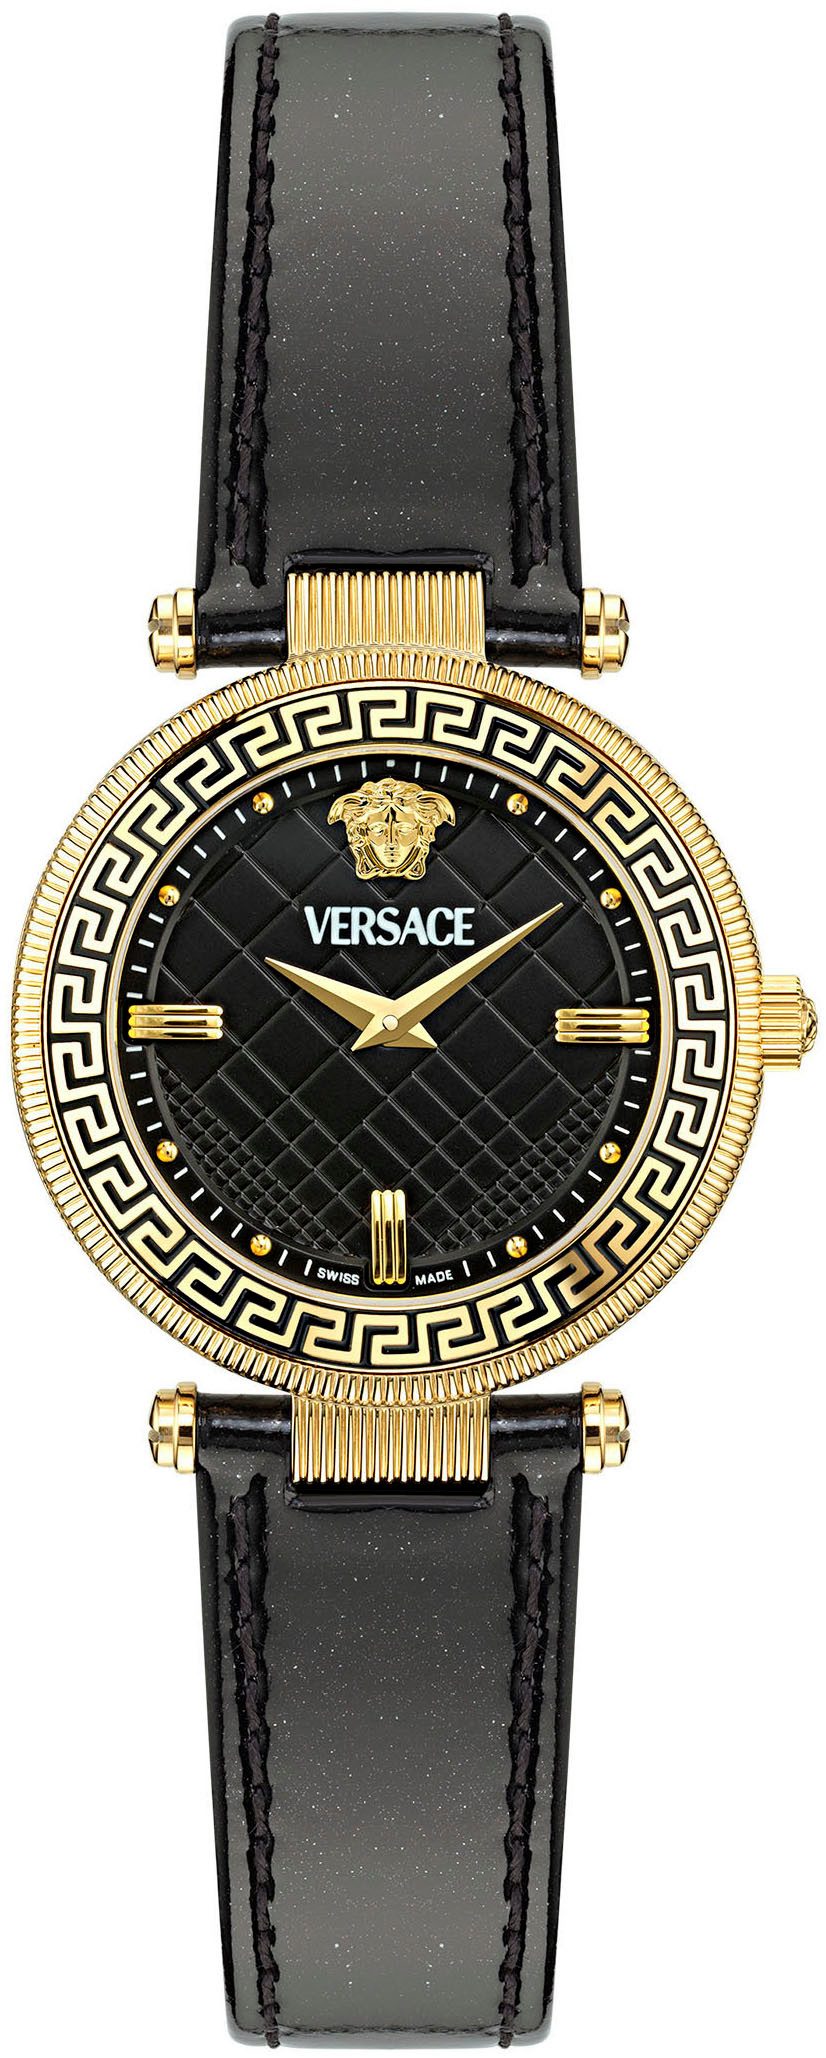 Versace Quarzuhr REVE, Armbanduhr, Damenuhr, Saphirglas, Swiss Made, analog